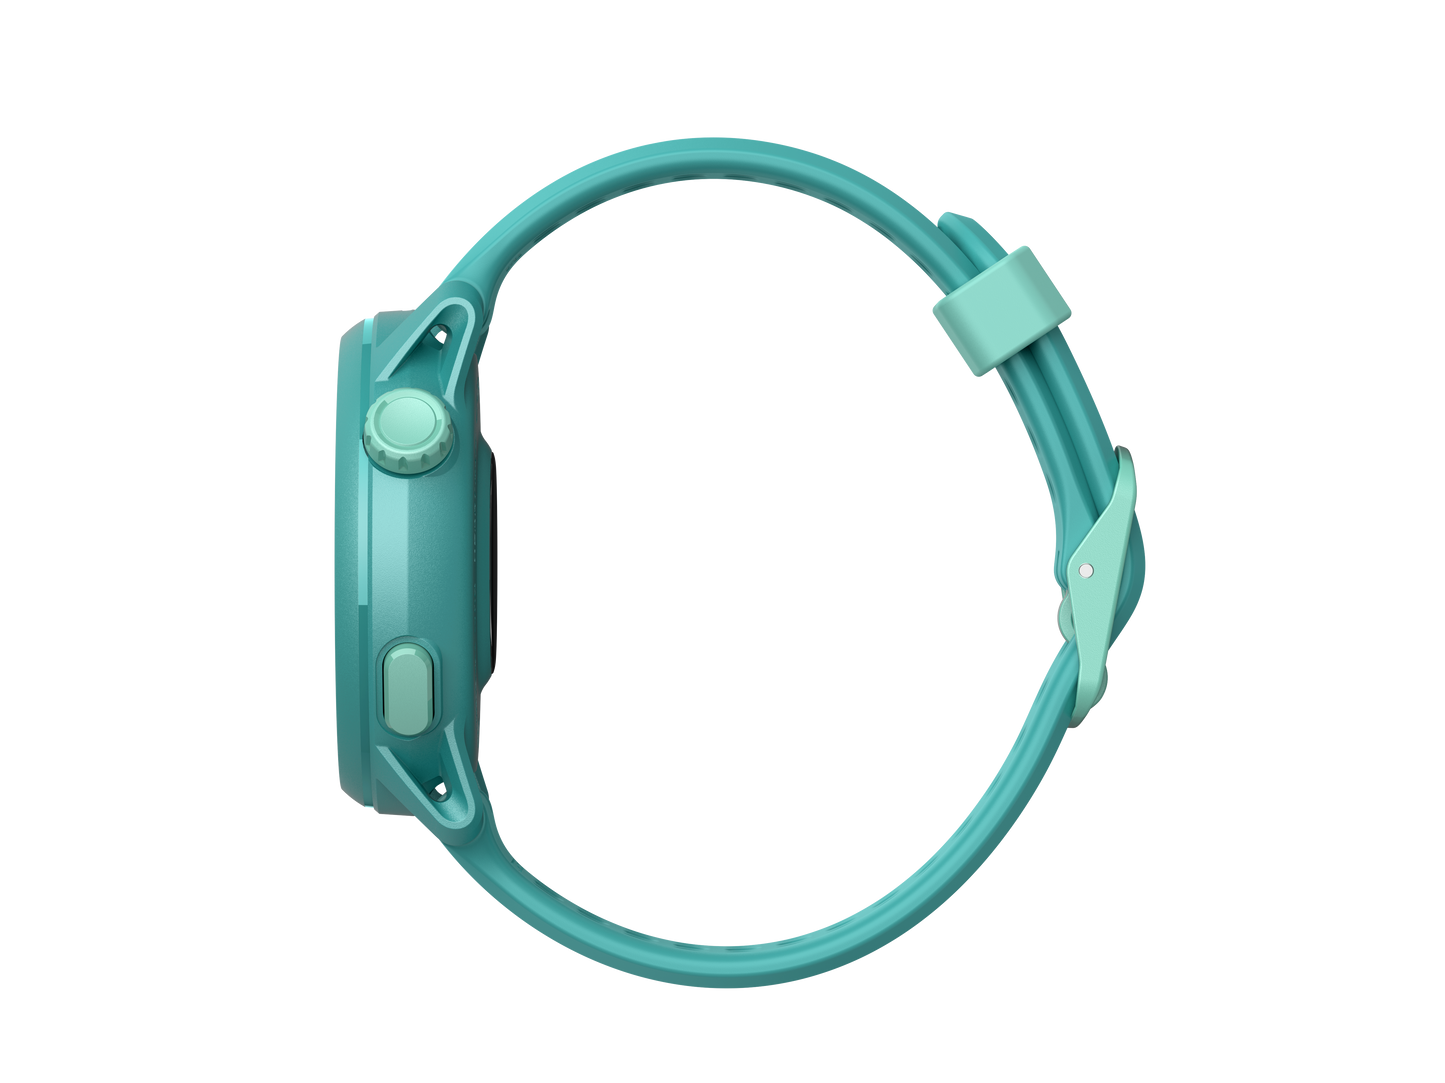 COROS - PACE 3 - GPS Sport Watch - Emerald